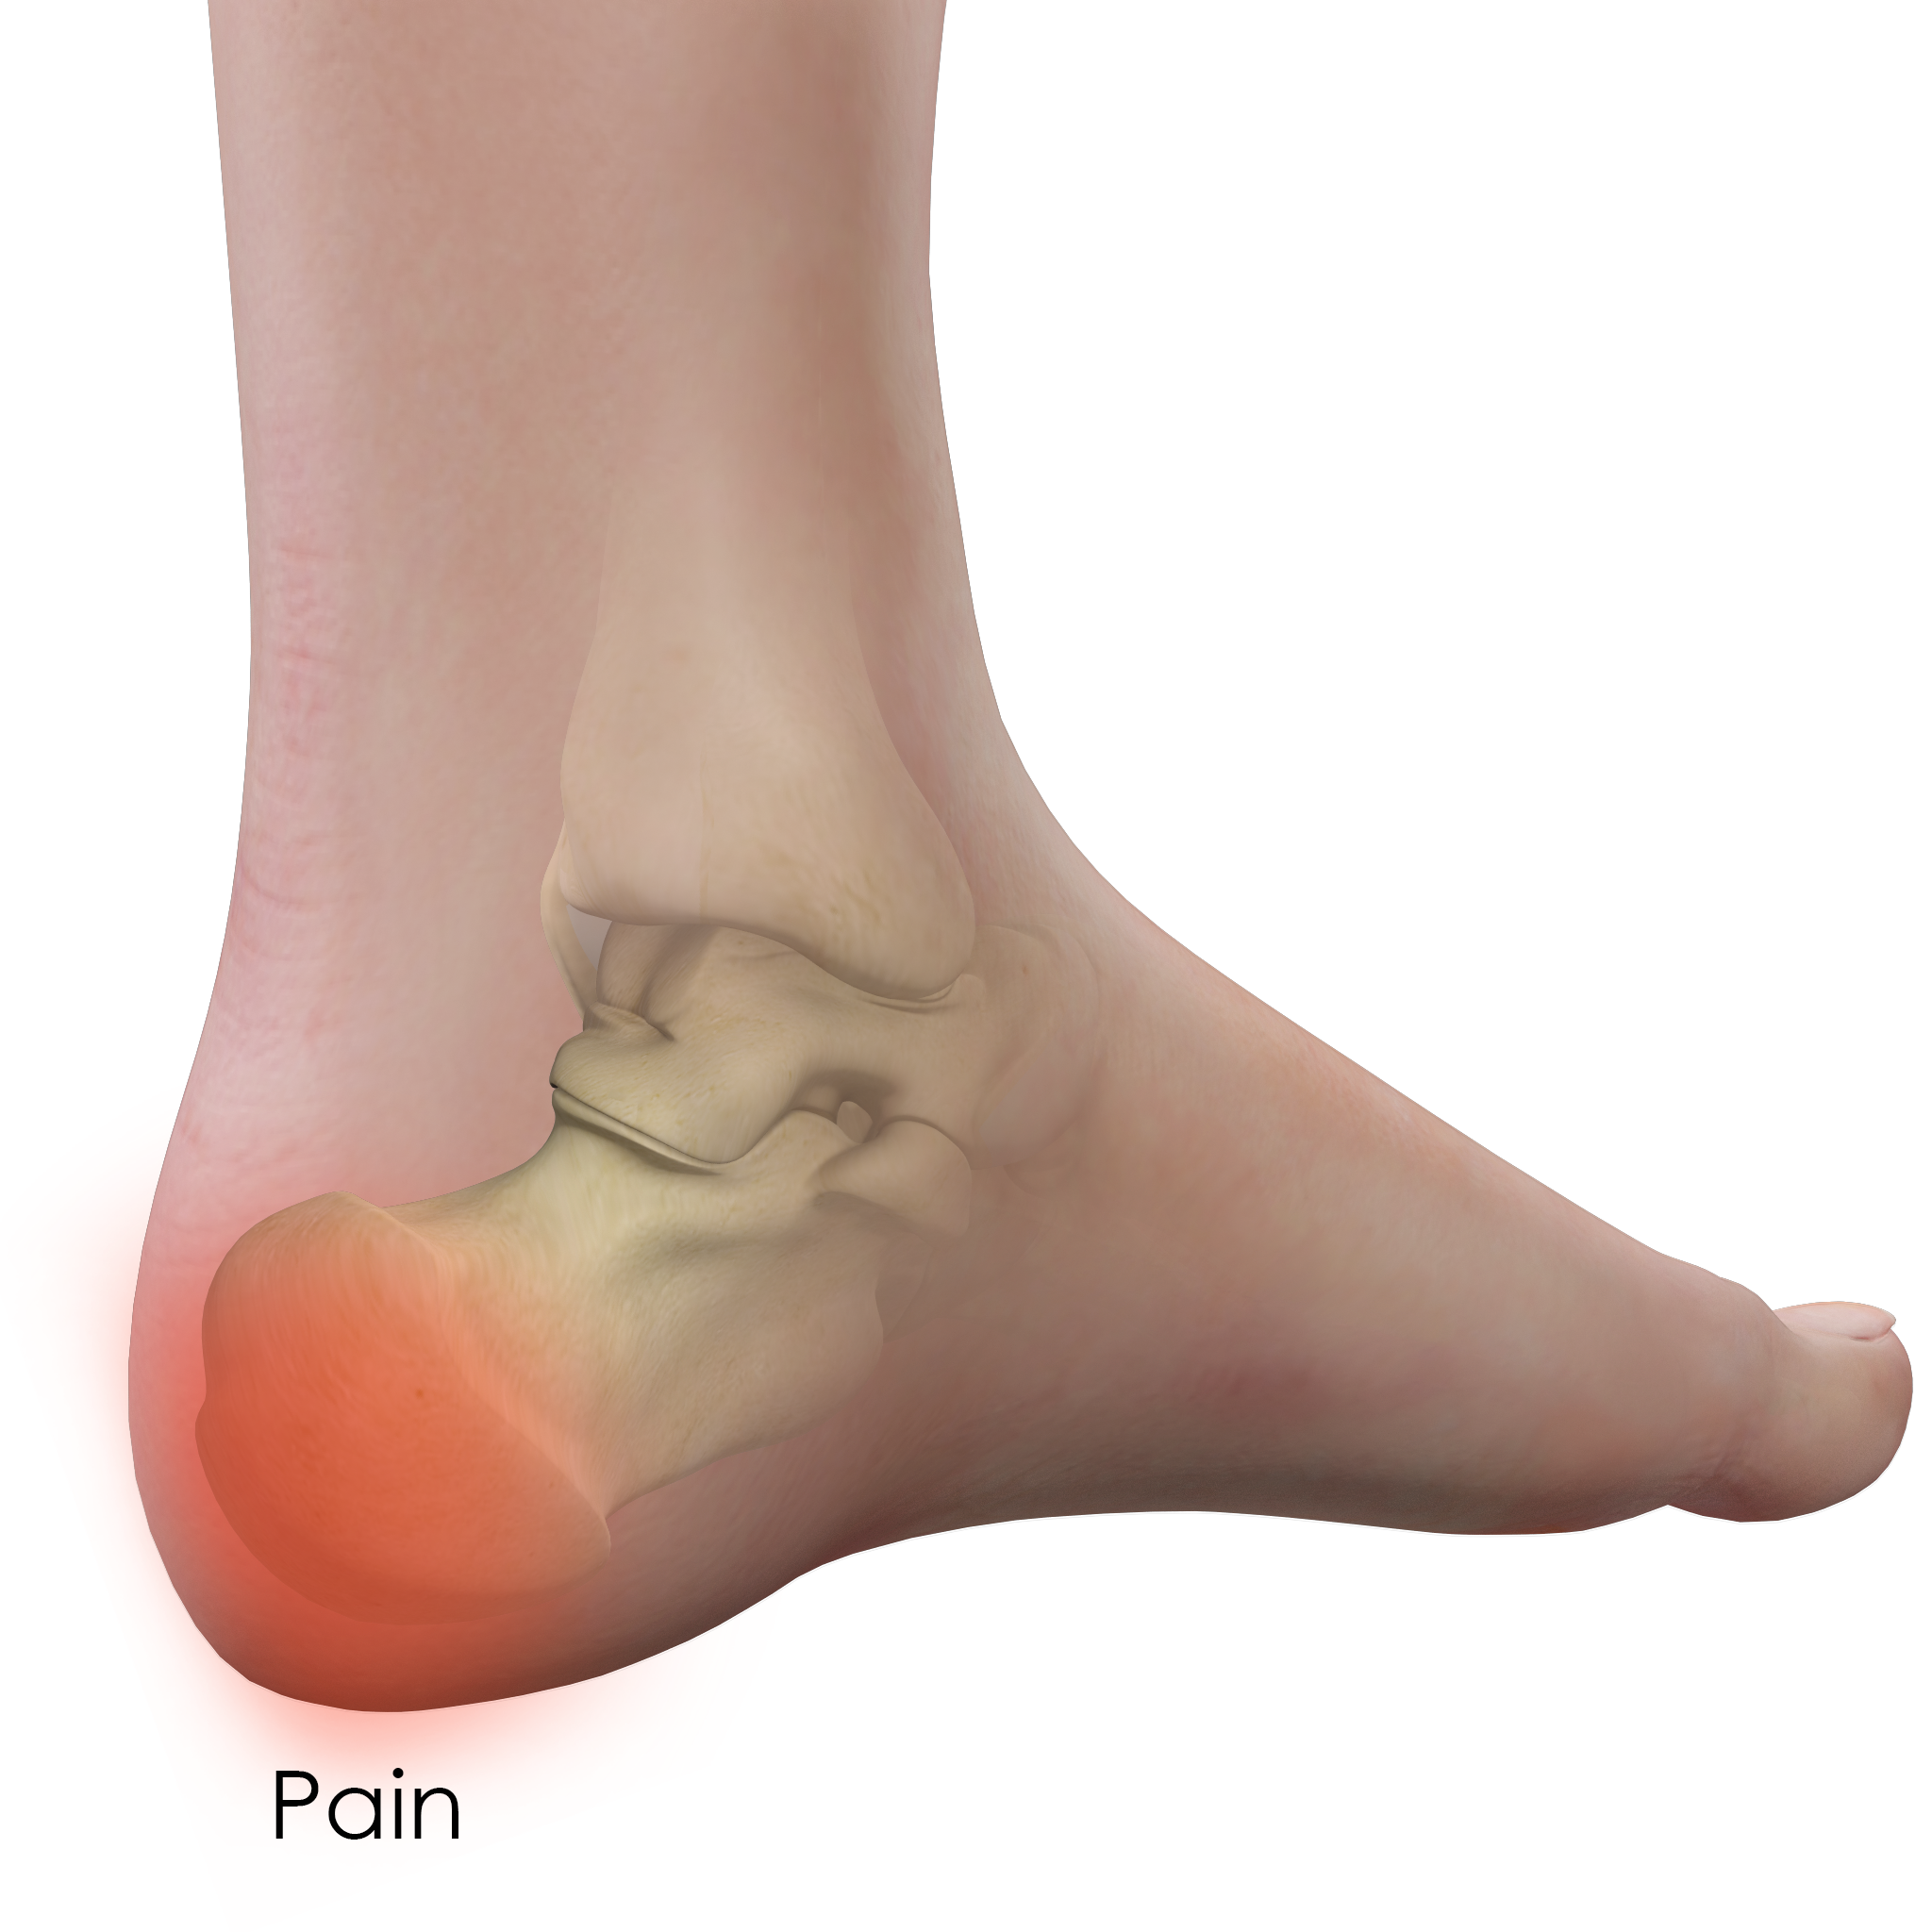 pain behind the heel